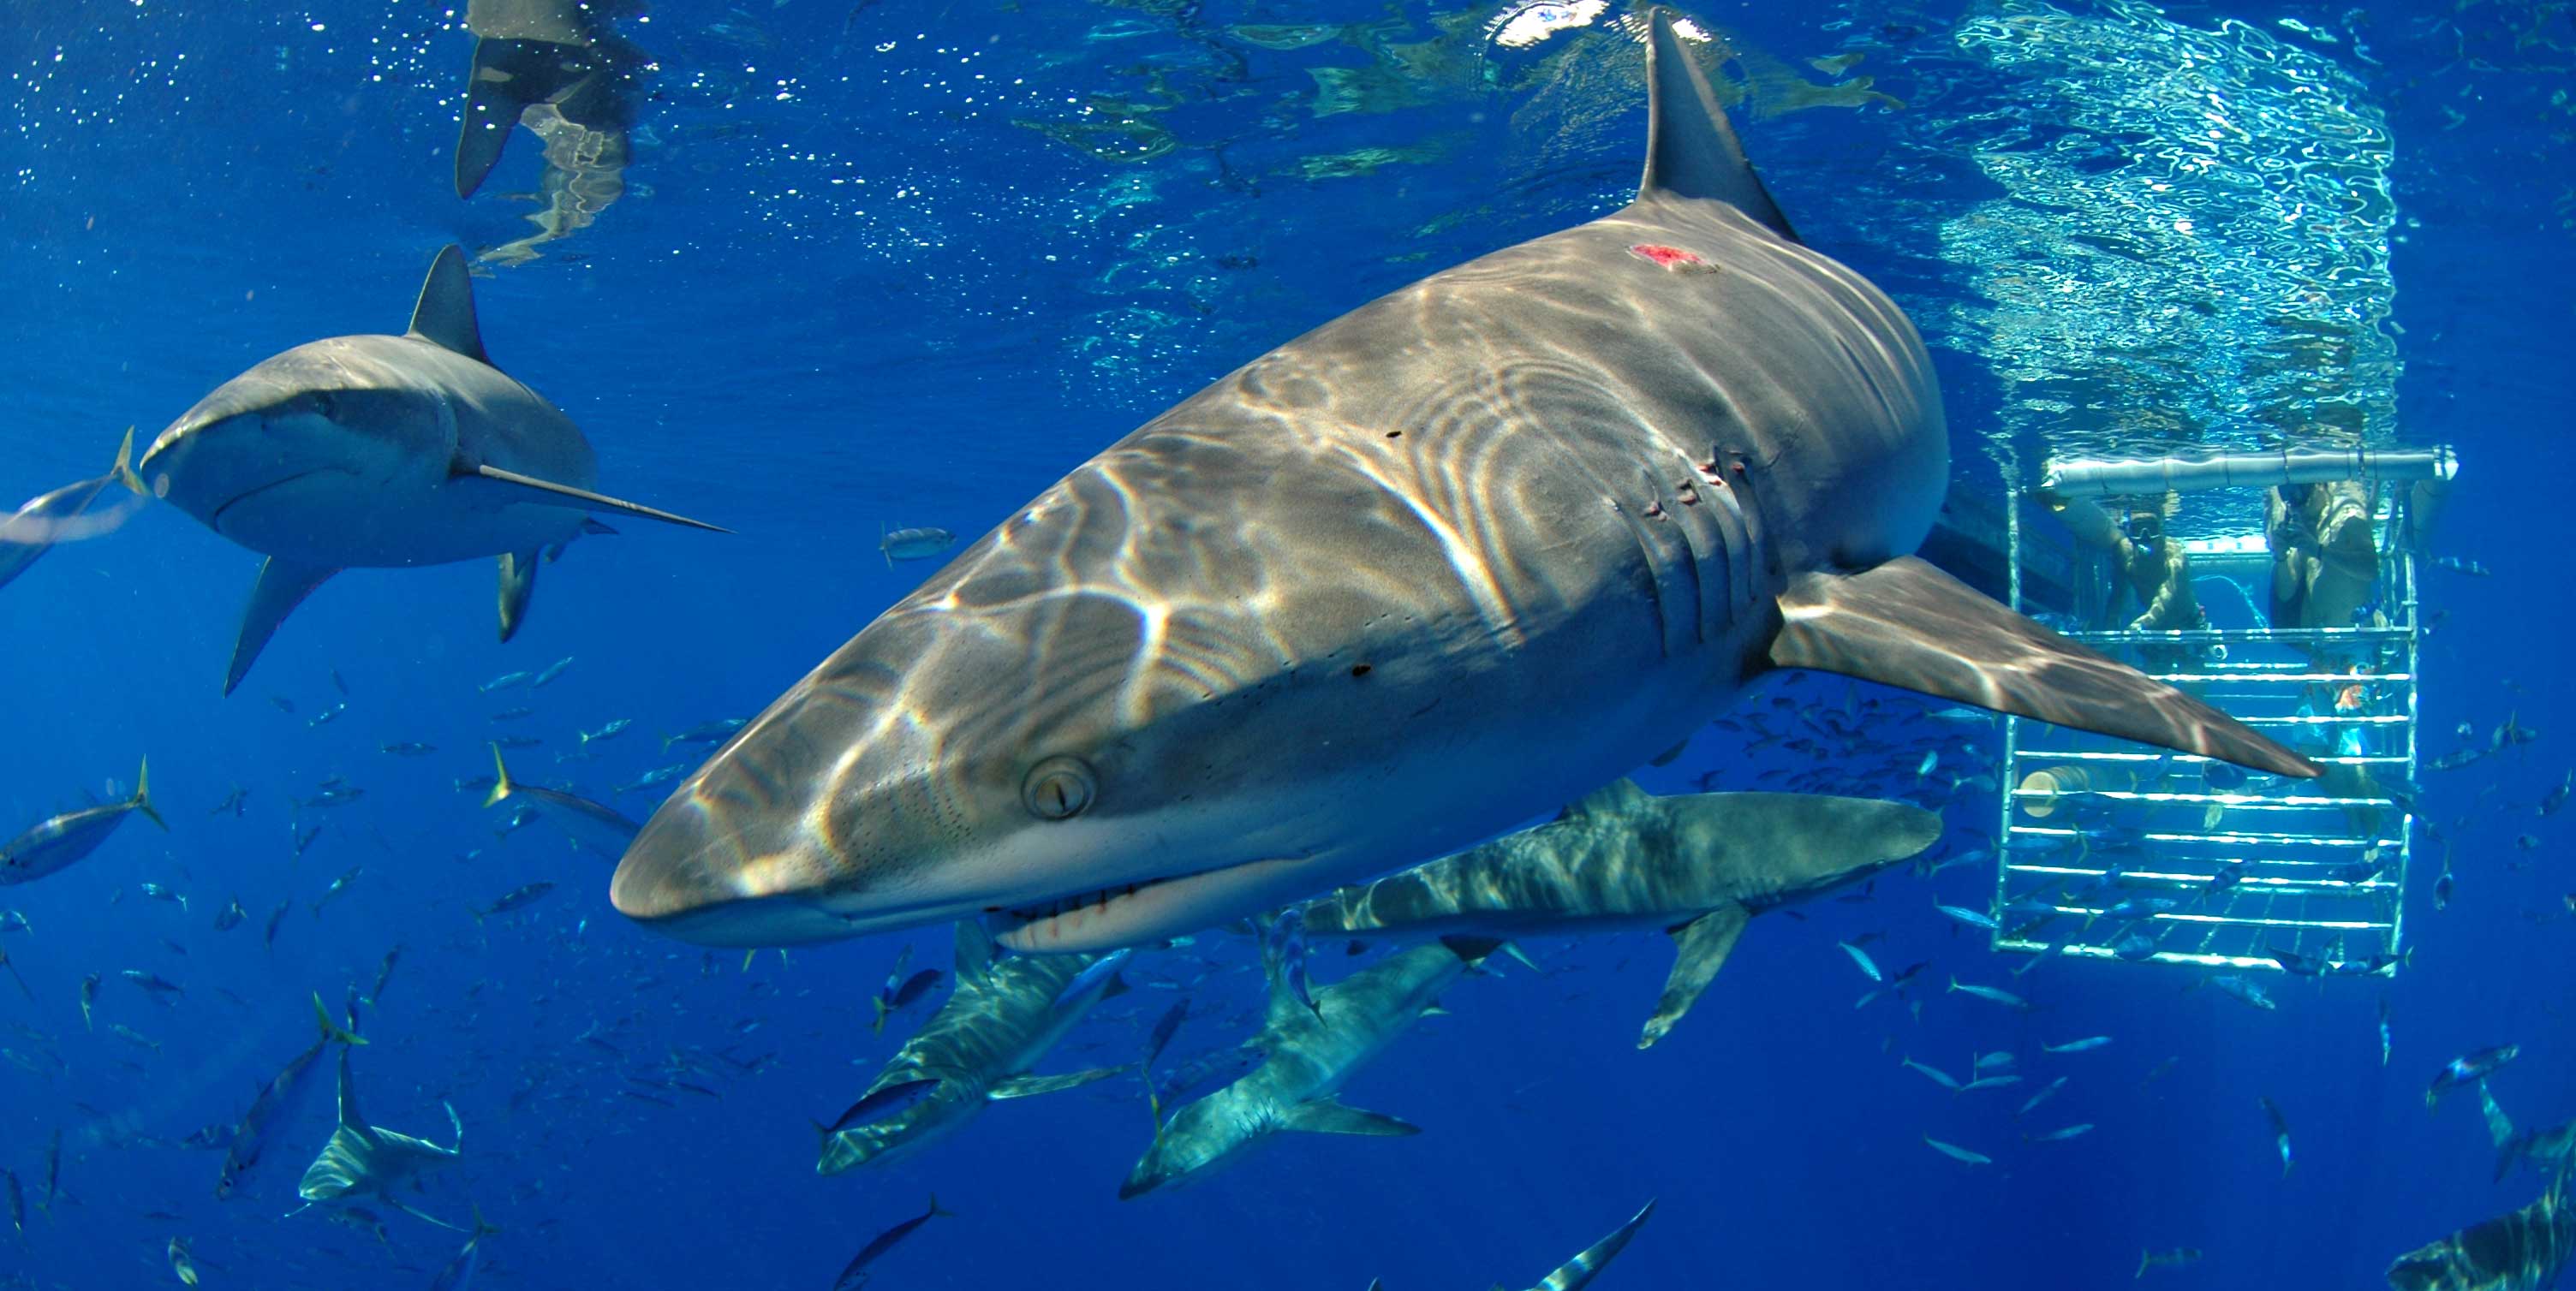 Oahu Shark Cage Dive Encounter From 105 Peek